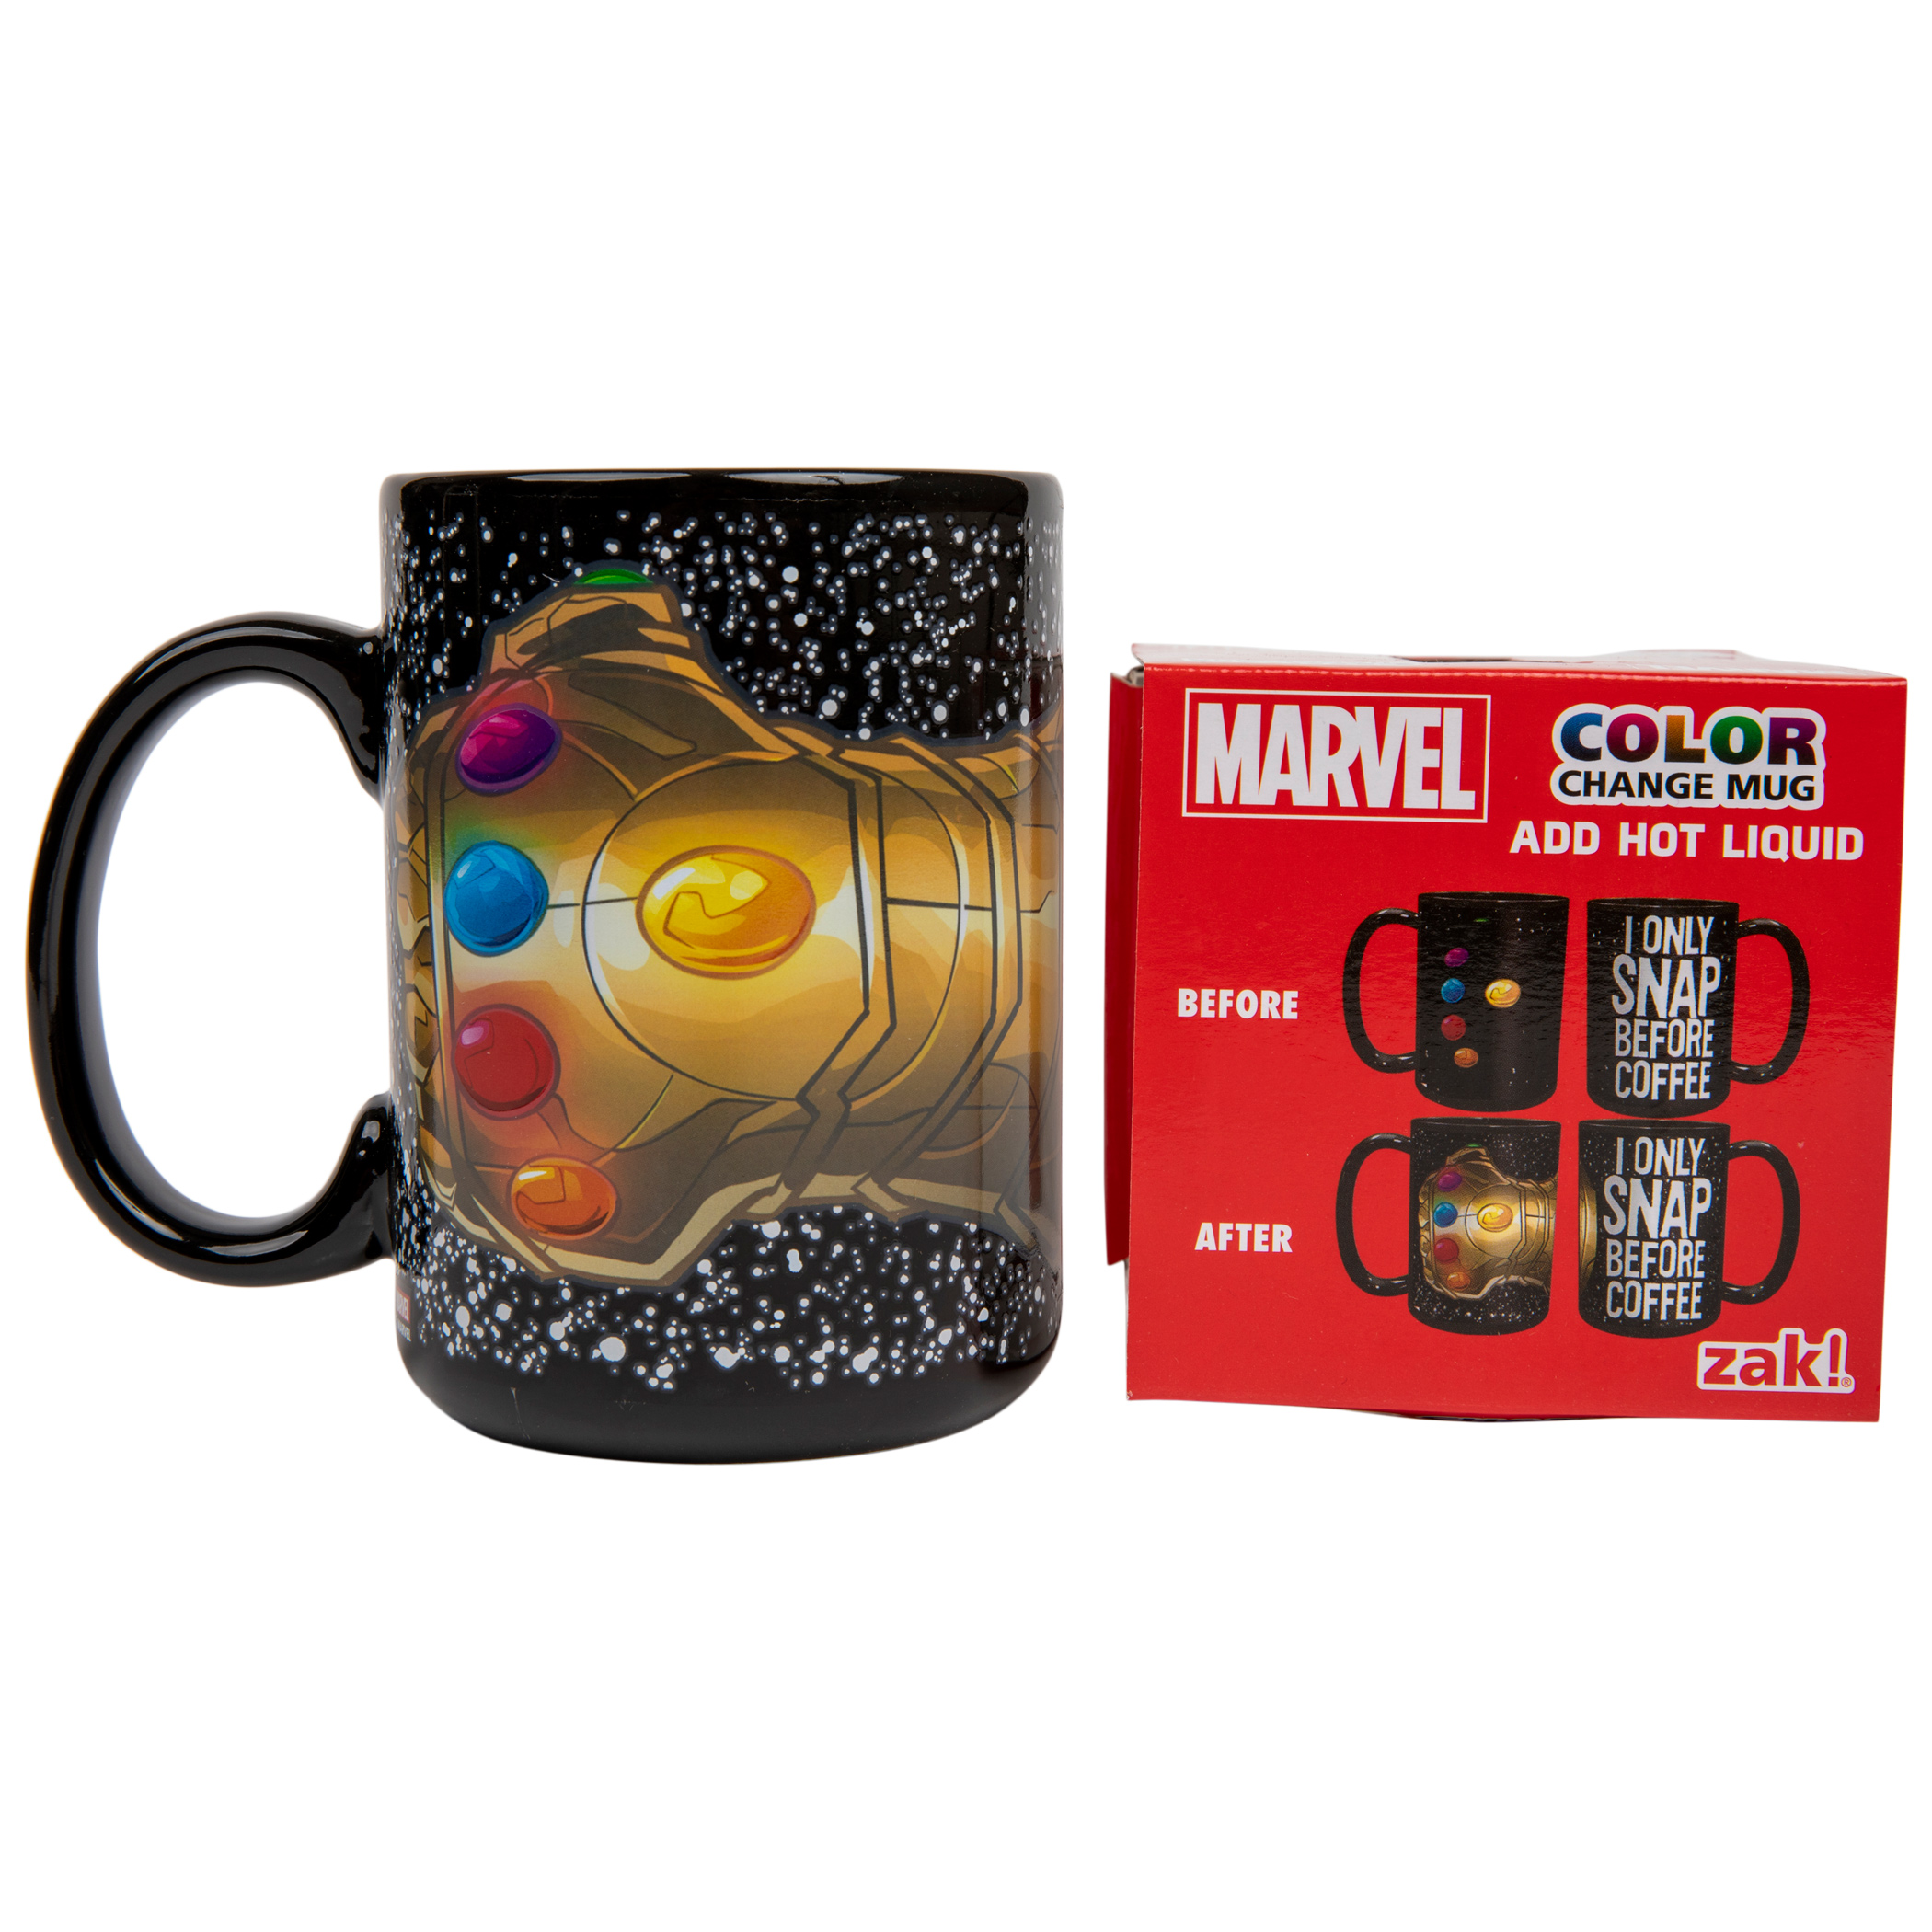 Thanos I Only SNAP Before Coffee 15oz. Color Change Ceramic Mug